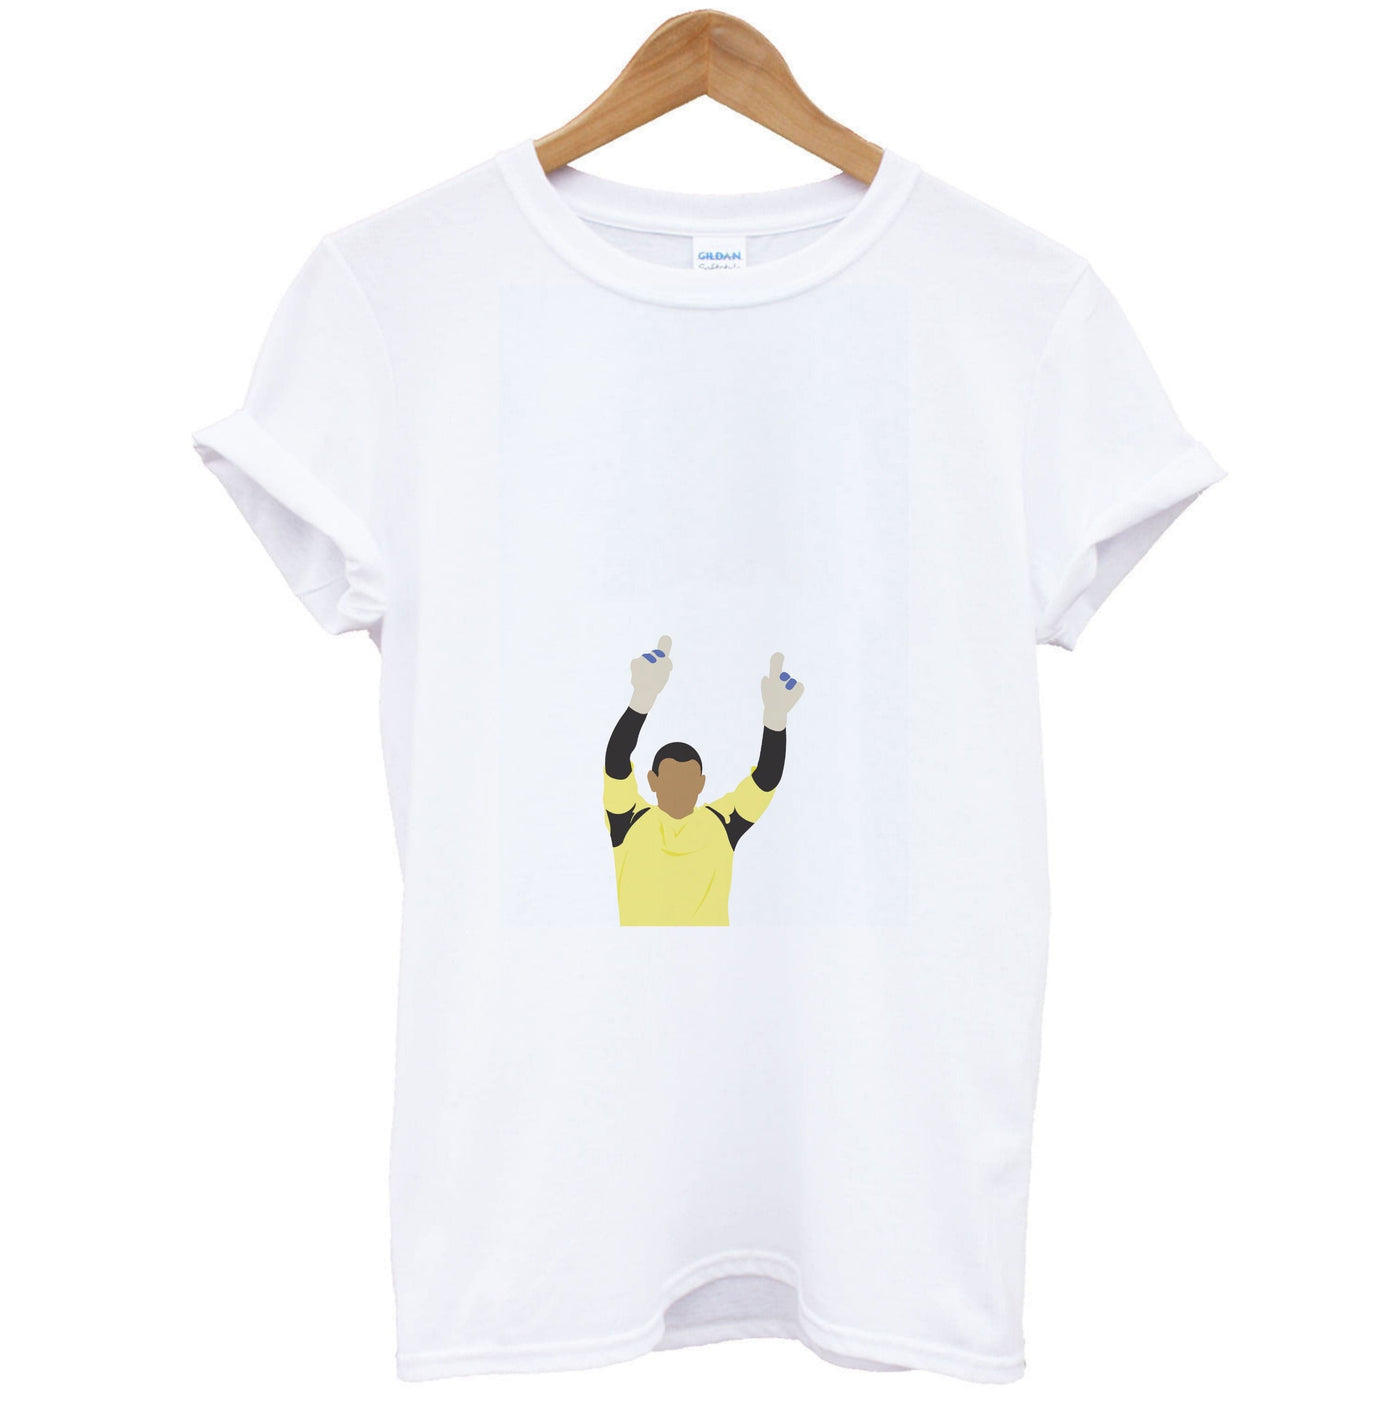 Nick Rimando - MLS T-Shirt